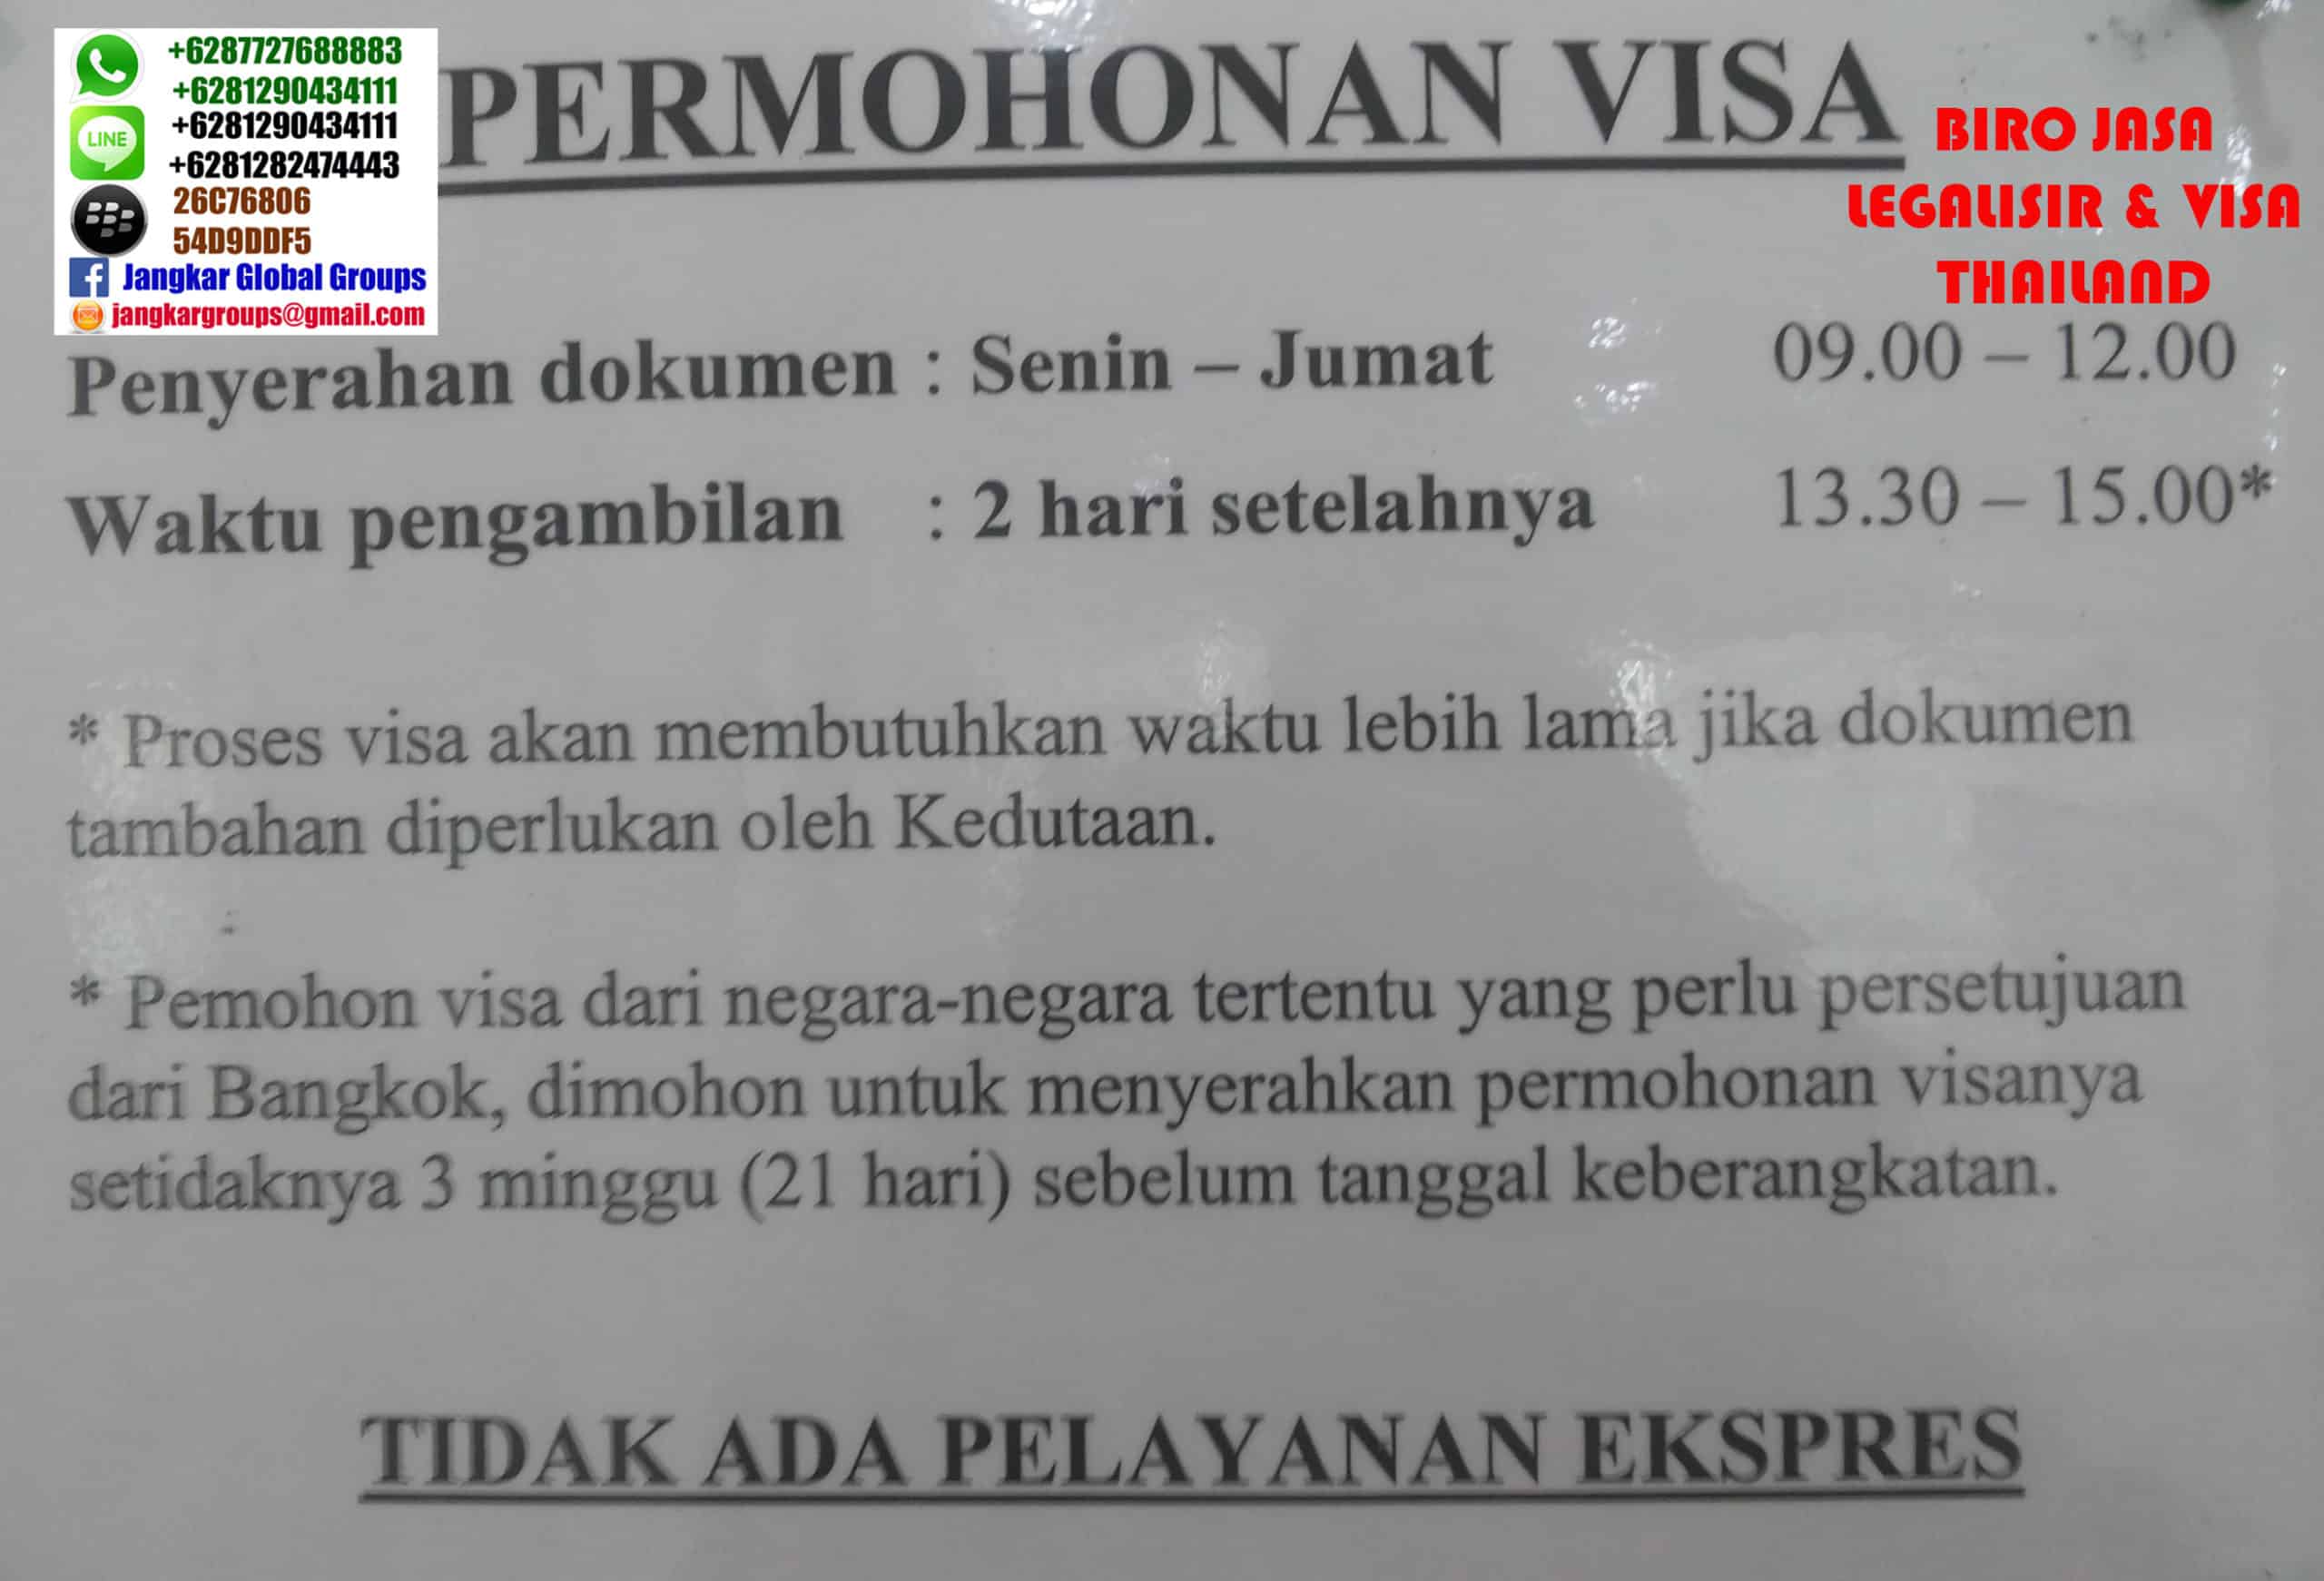 jasa visa kerja consular section thailand